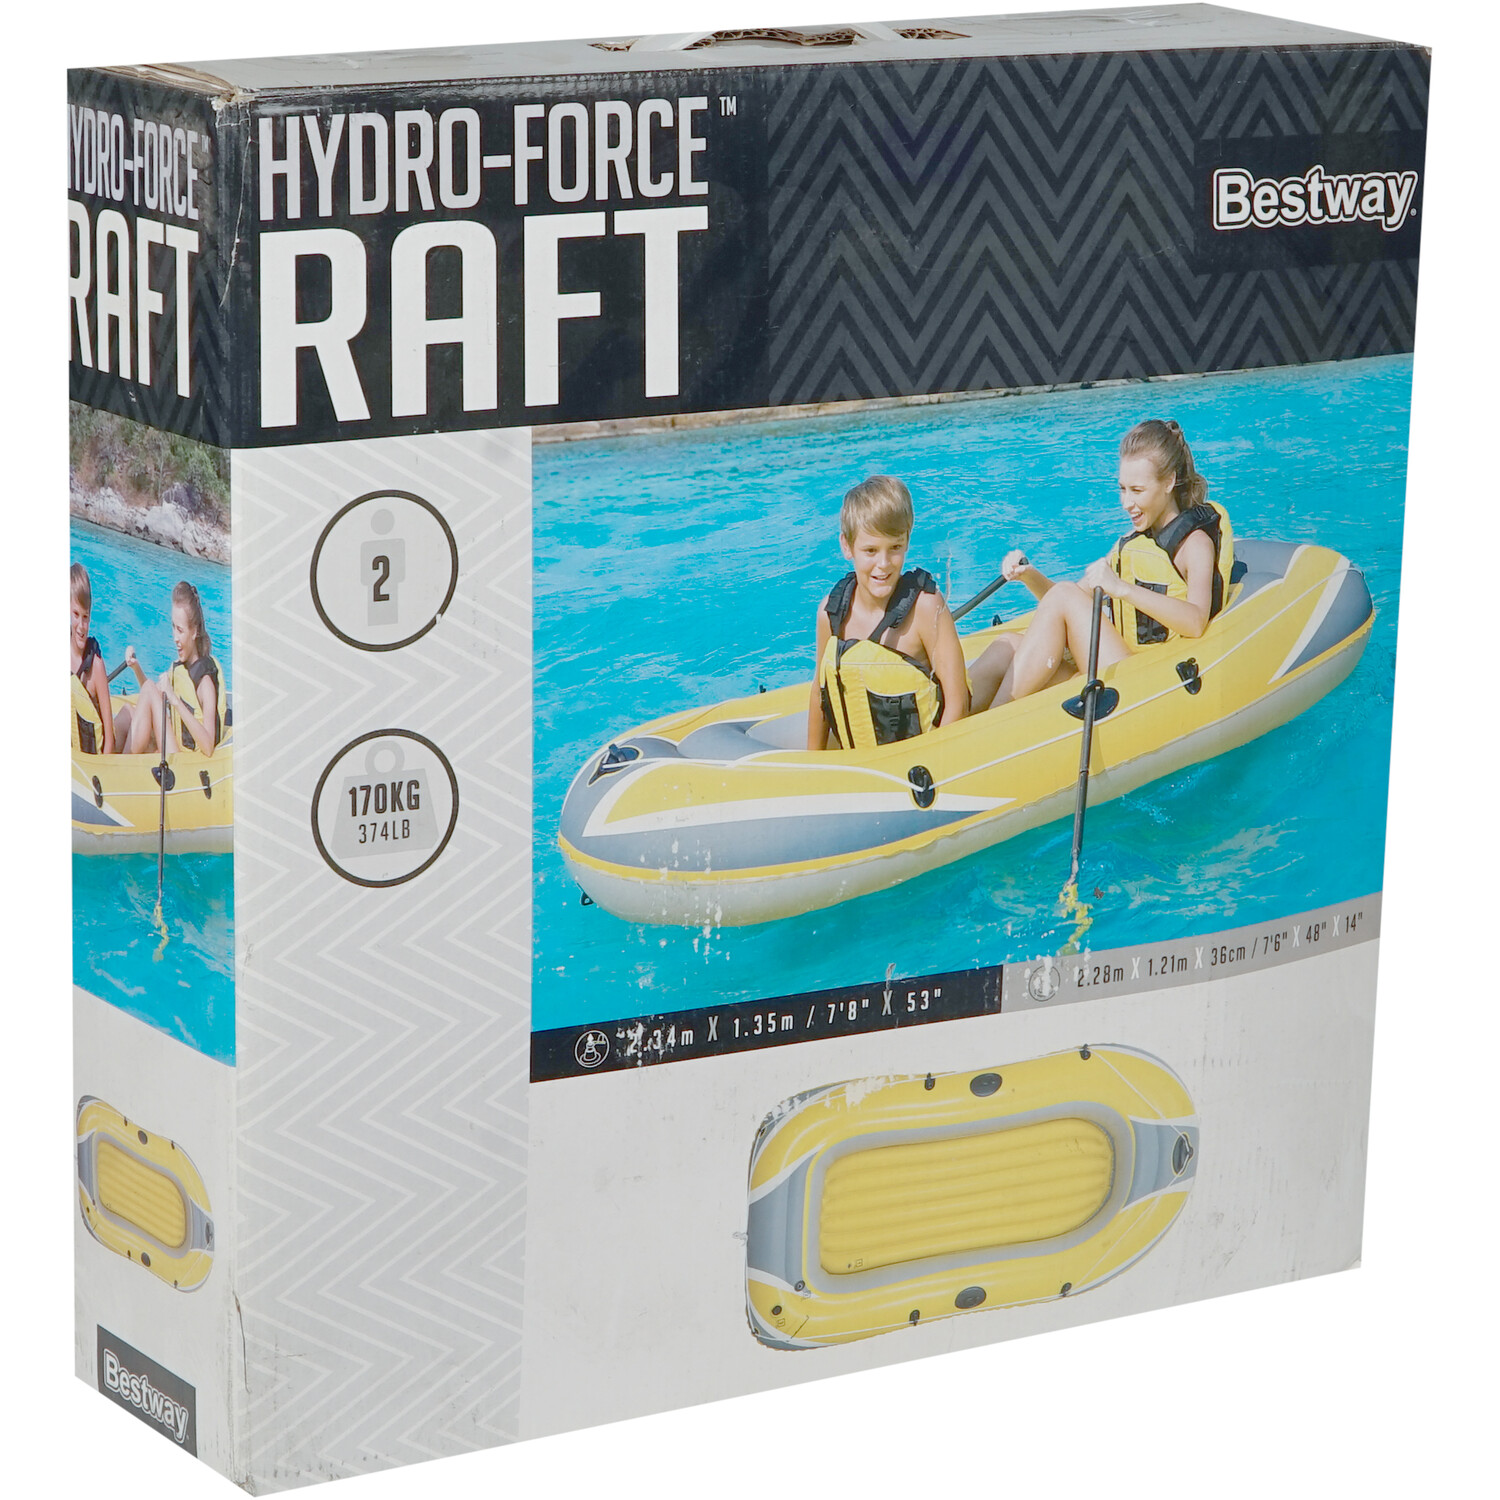 Hydro-Force Raft Image